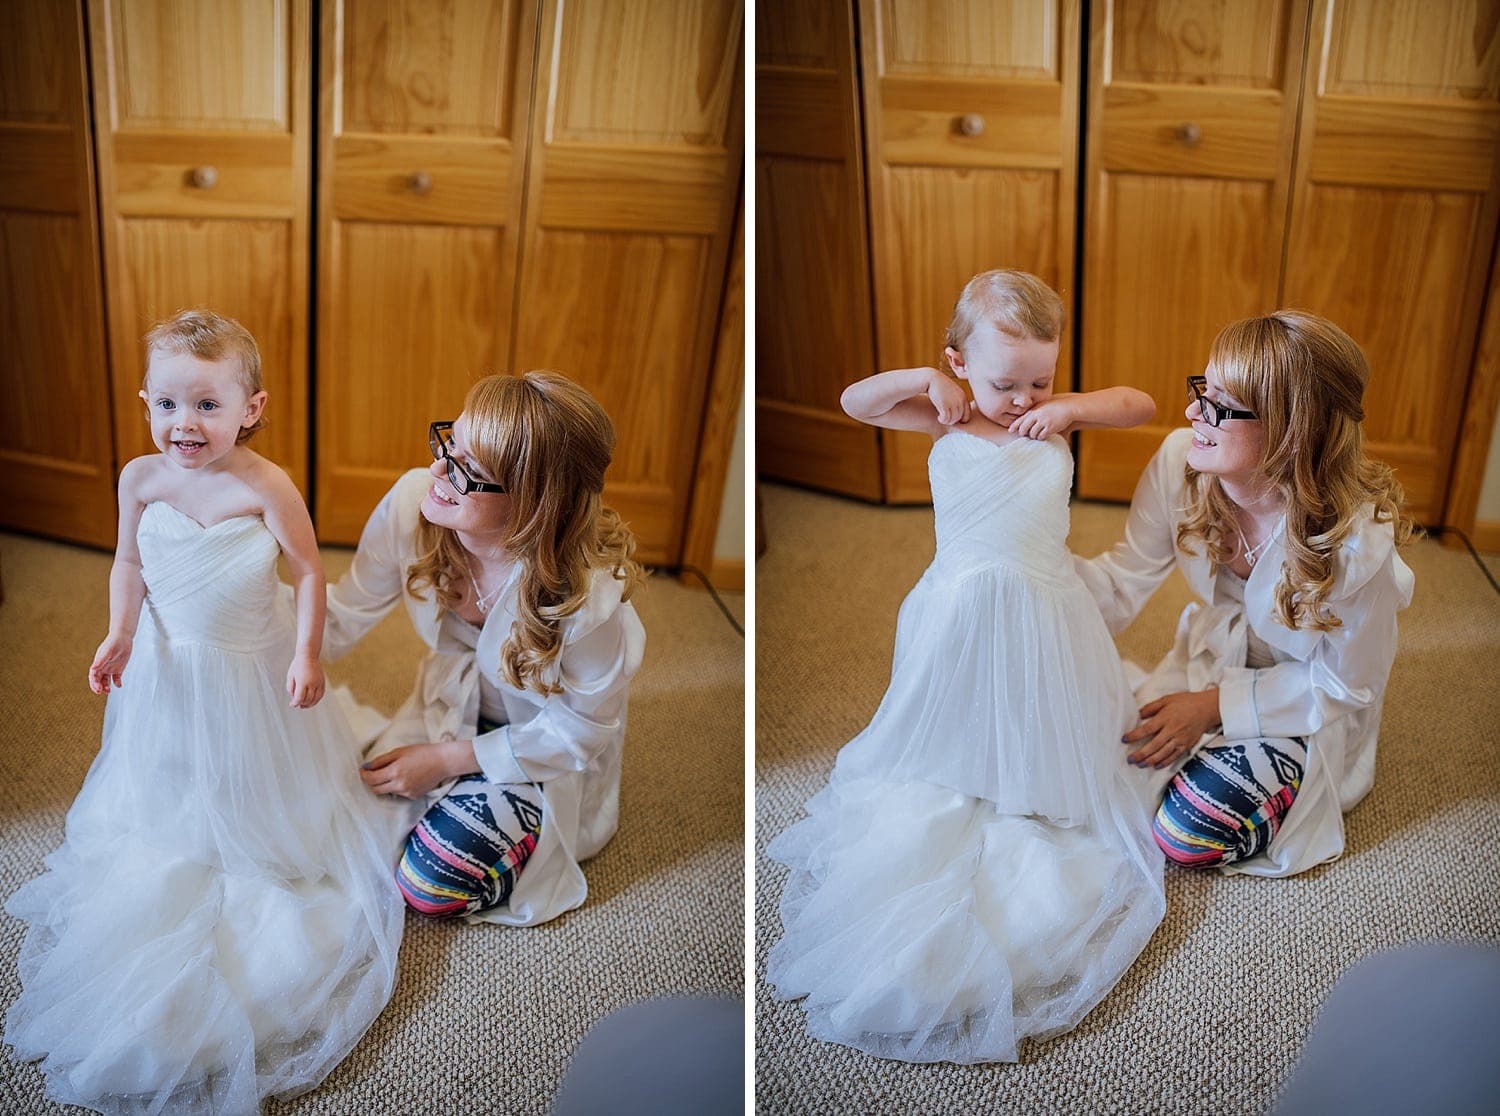 Child tried on bride's white wedding dress. 